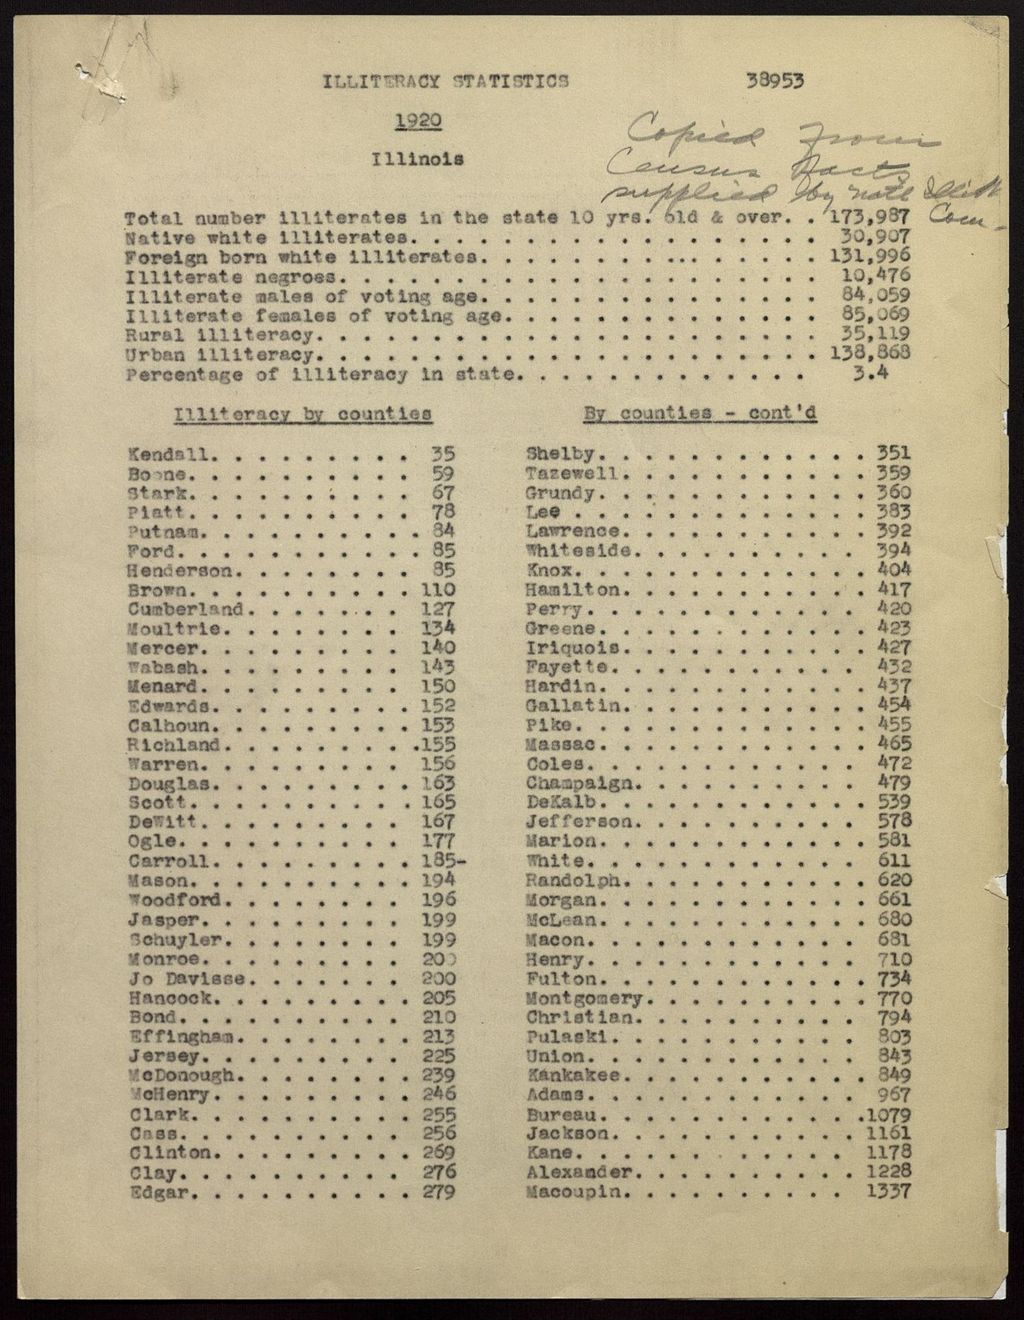 Miniature of Illiteracy Commission of the United States, 1920-1931 (Folder 48)